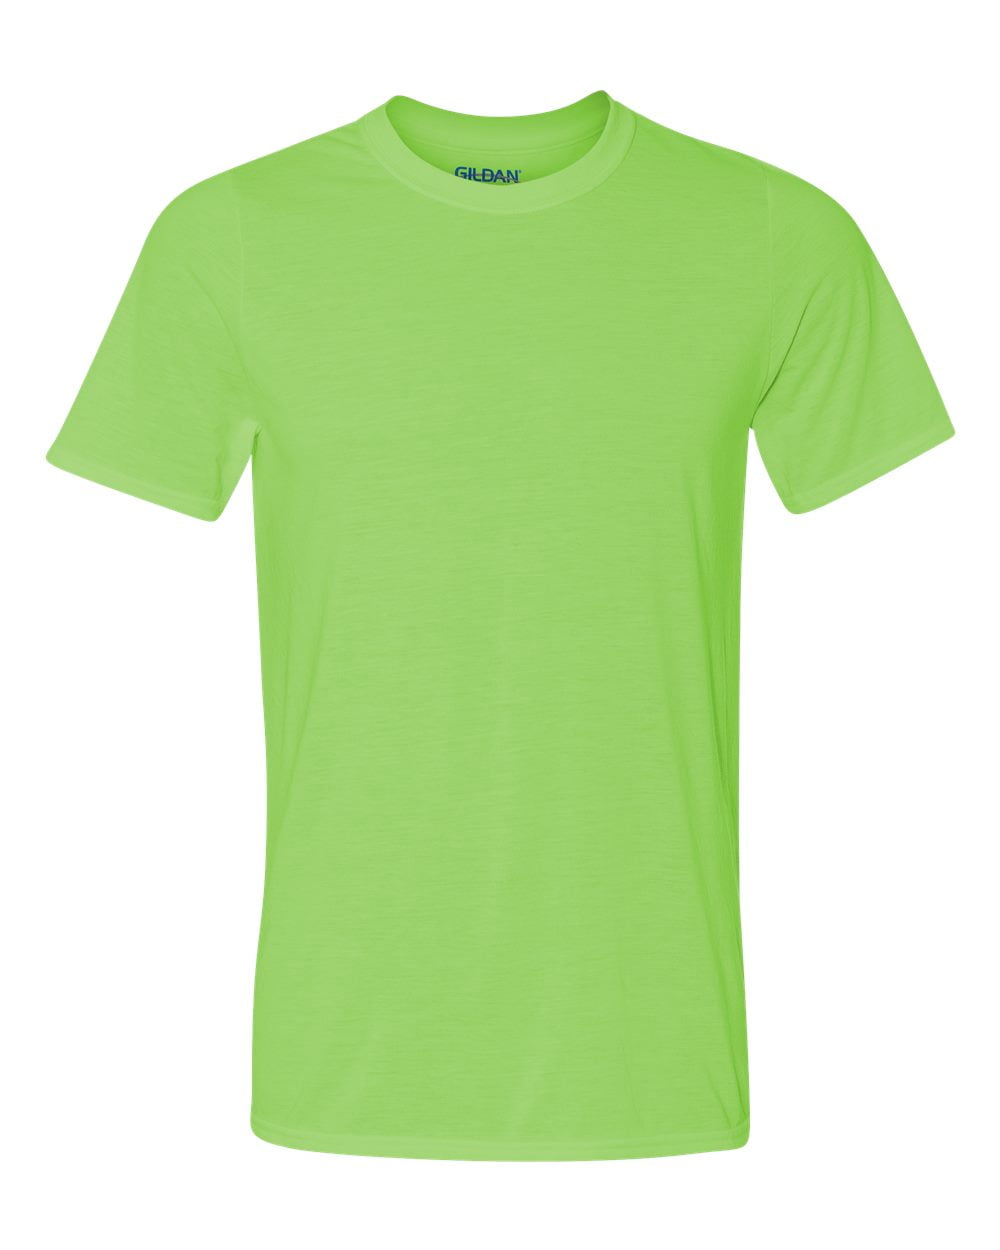 Performance T-Shirt, L, Military Green - Walmart.com